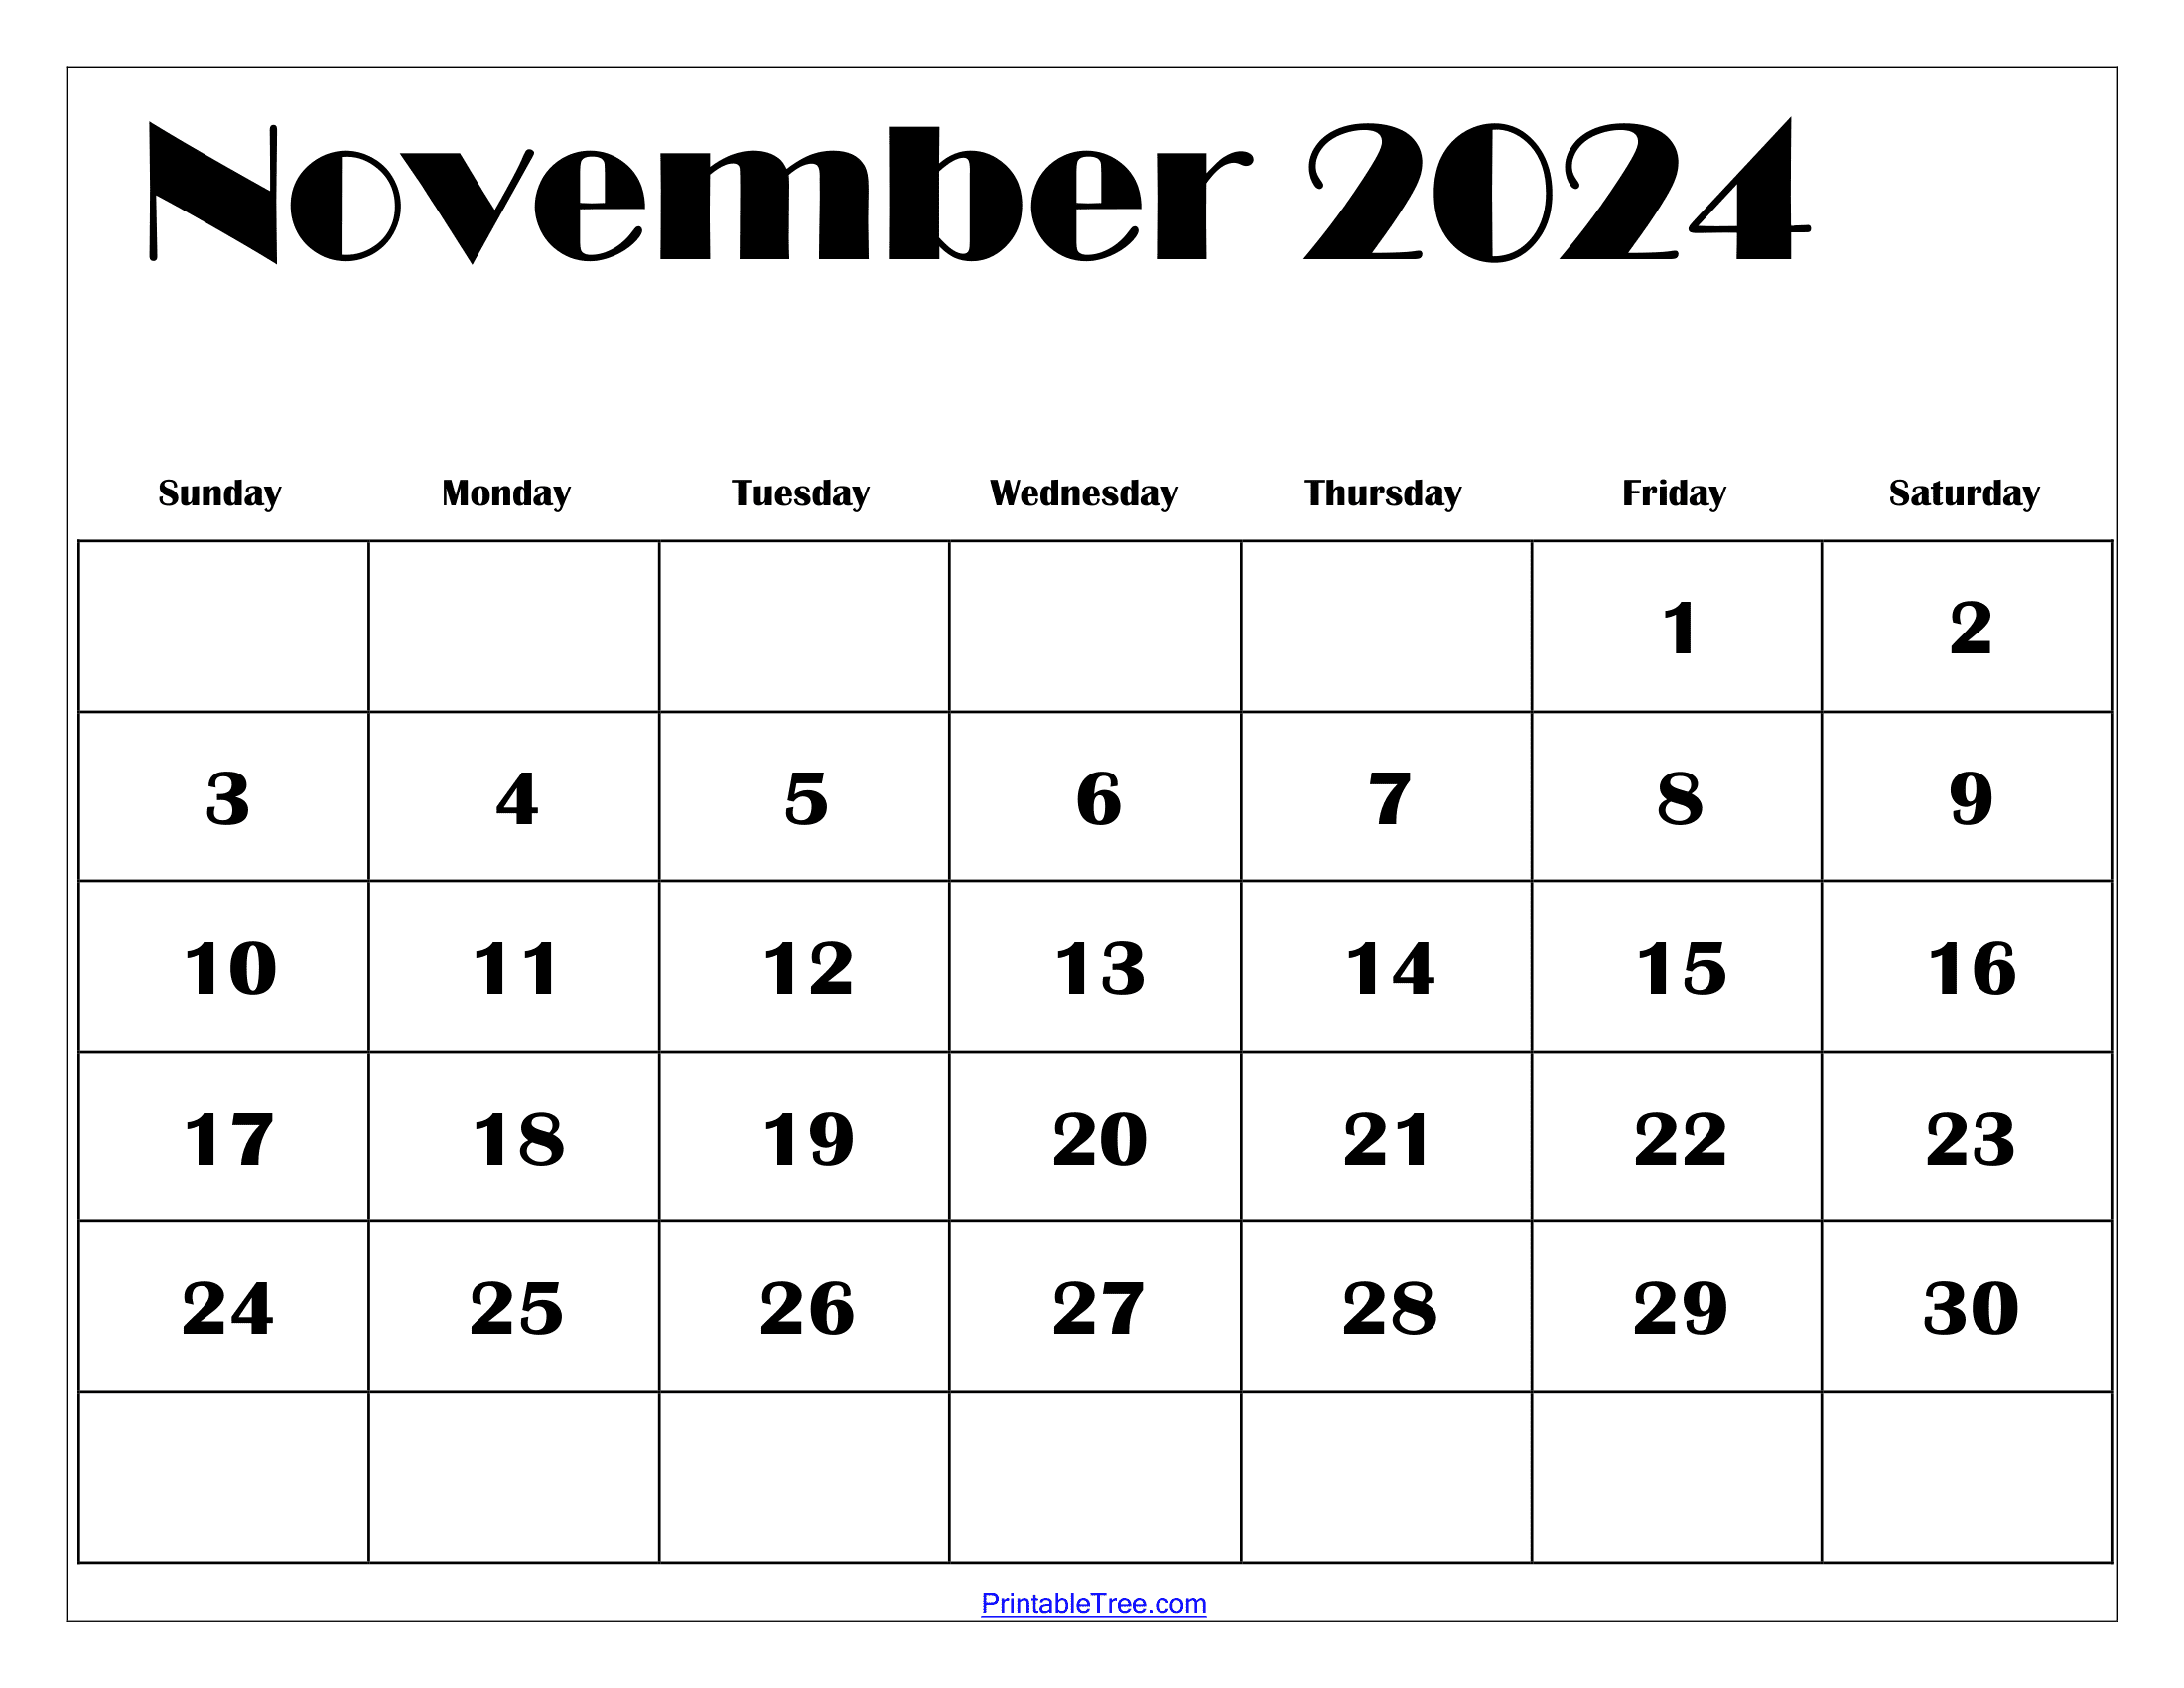 November 2024 Calendar Printable Pdf Template With Holidays for Calendar November 2024 Printable